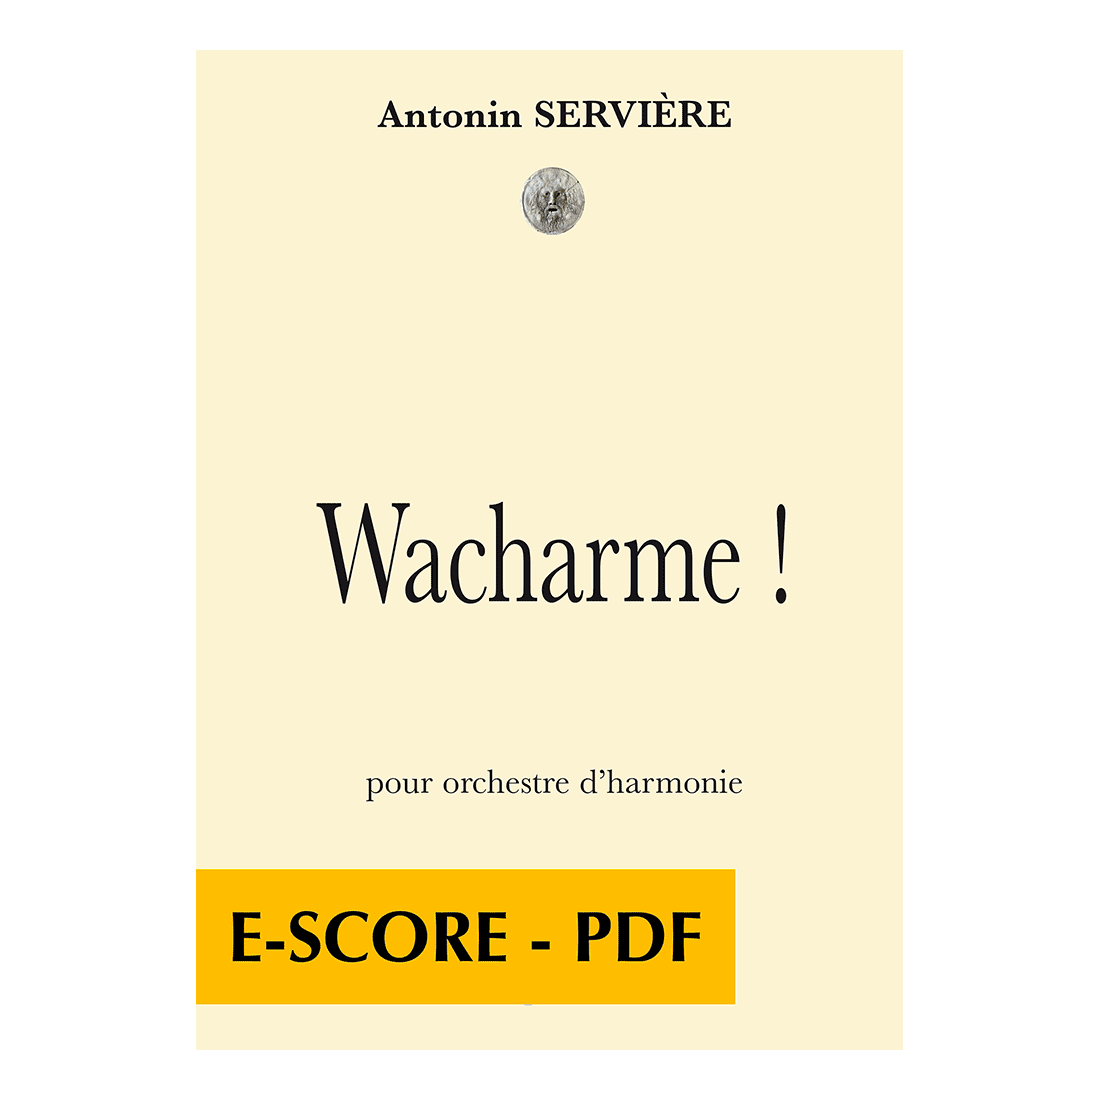 Wacharme ! for concert band (FULL SCORE) - E-score PDF